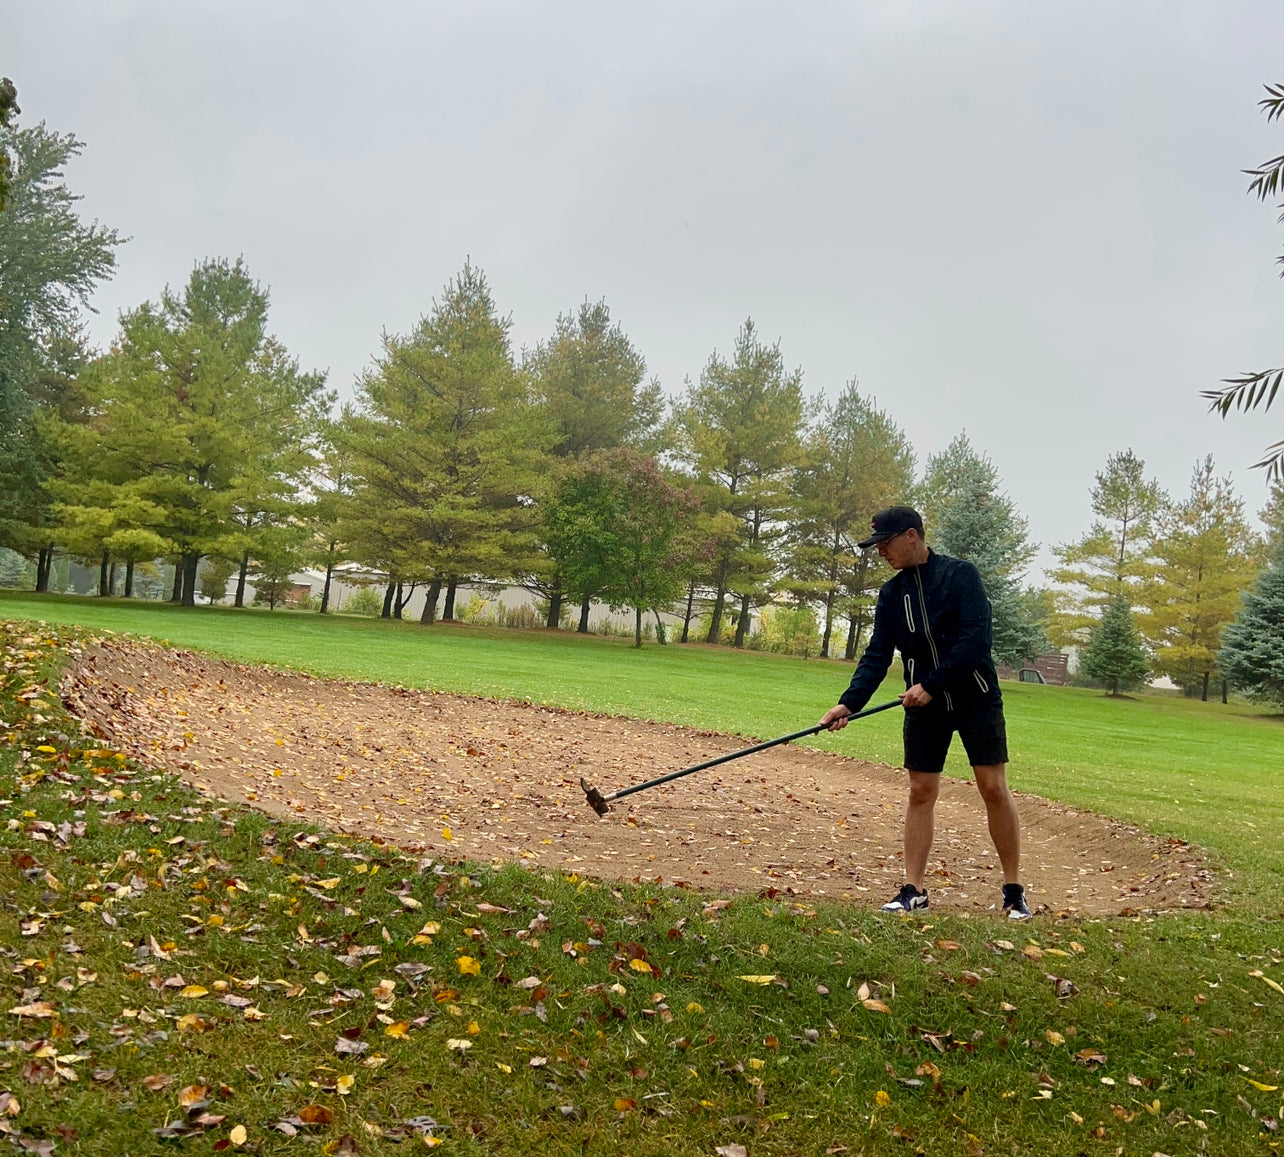 Embrace the Autumn Season: Enjoying Golf as the Days Get Shorter